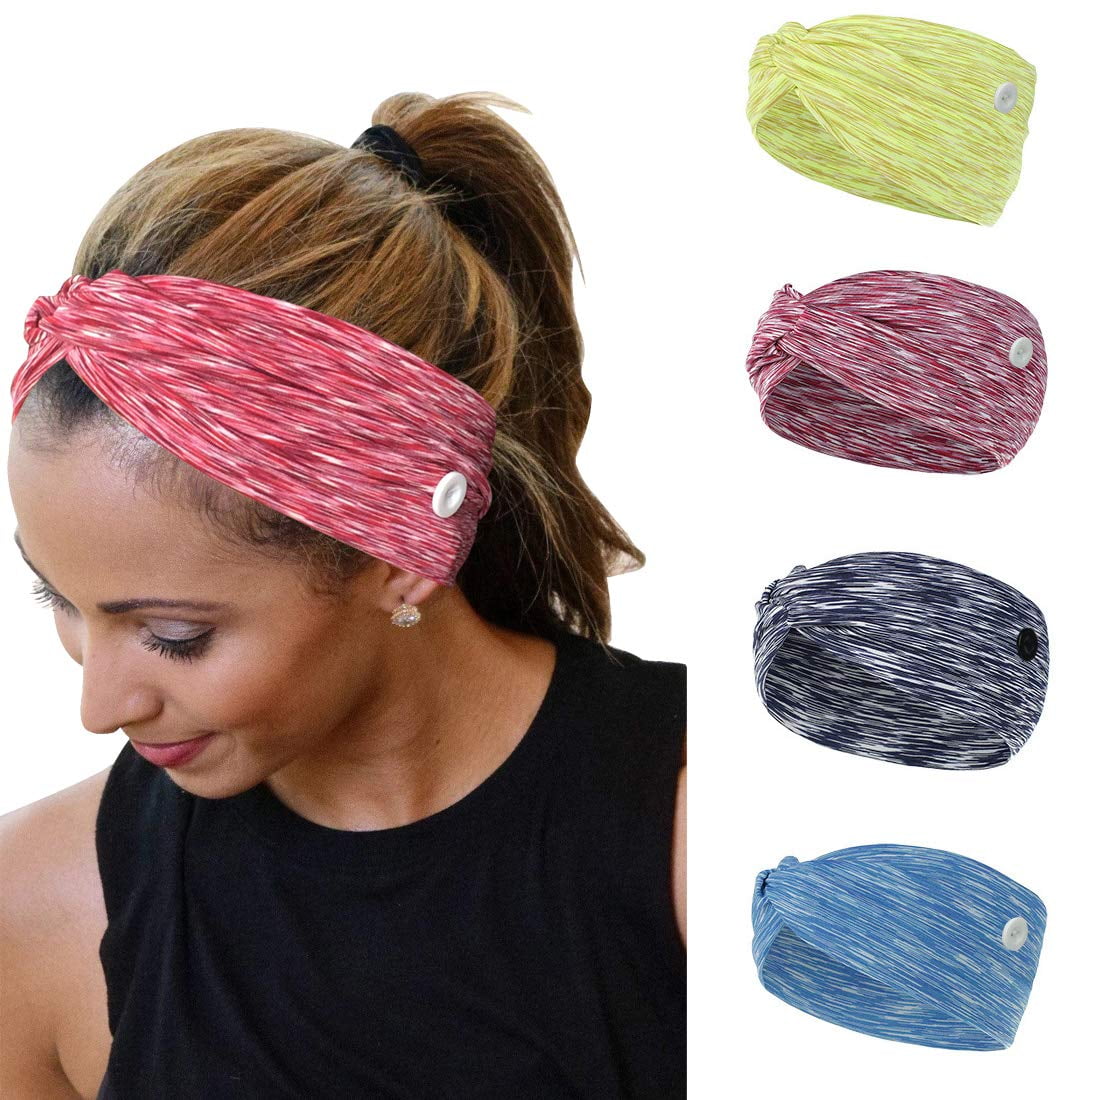 4pcs Button Headbands Set Non Slip Elastic Headbands with Button in 4 Colors... 